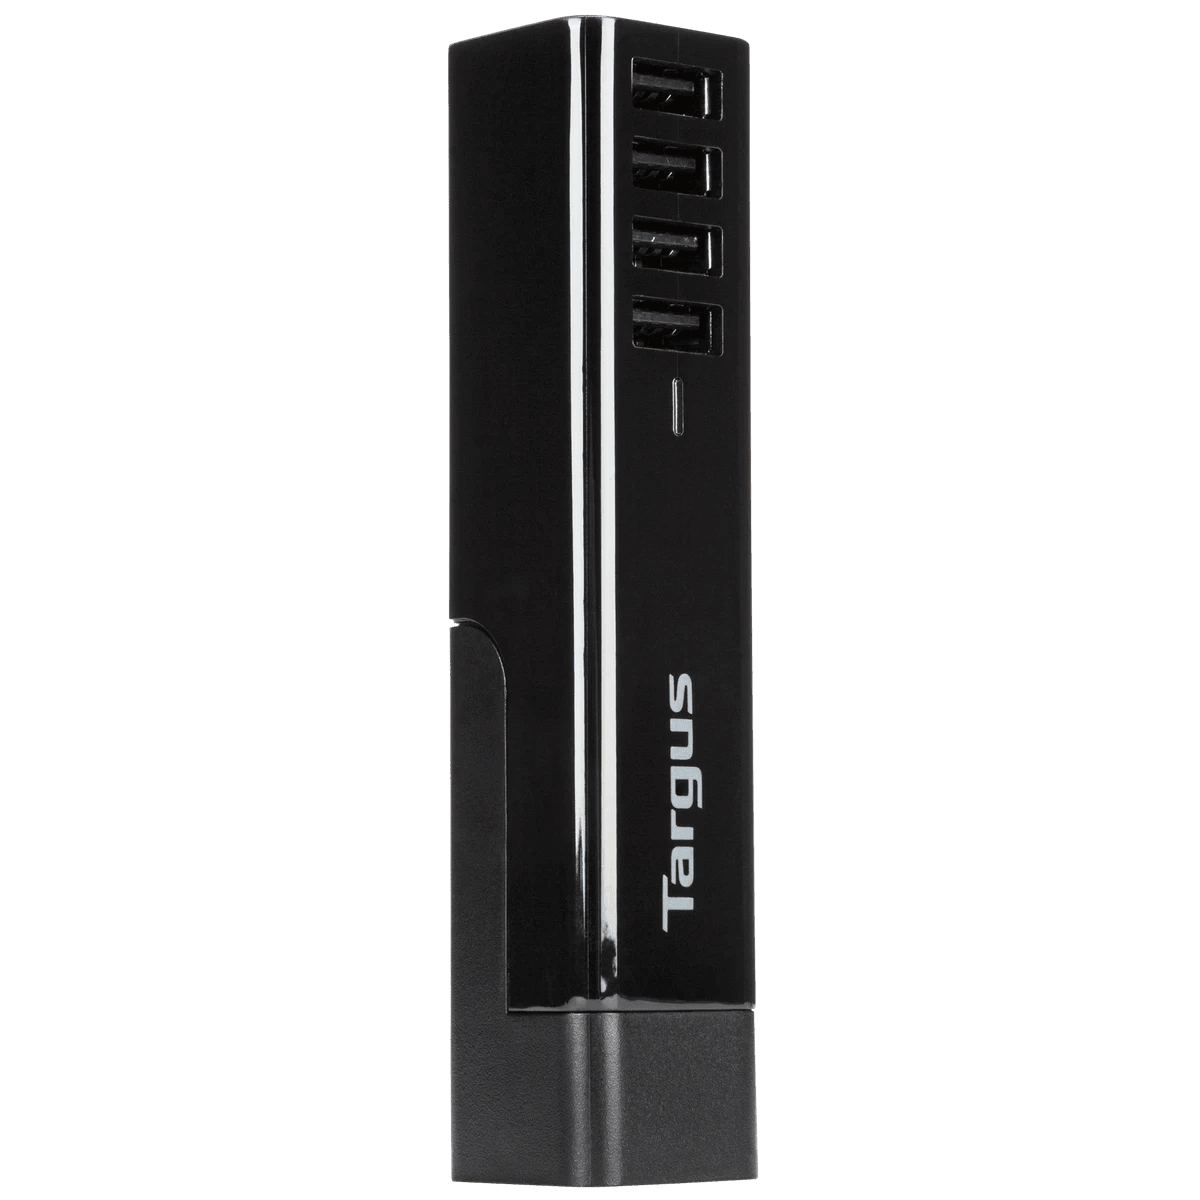 Adaptador targus universal multi enchufe usb + bateria externa 2.100 mah  white